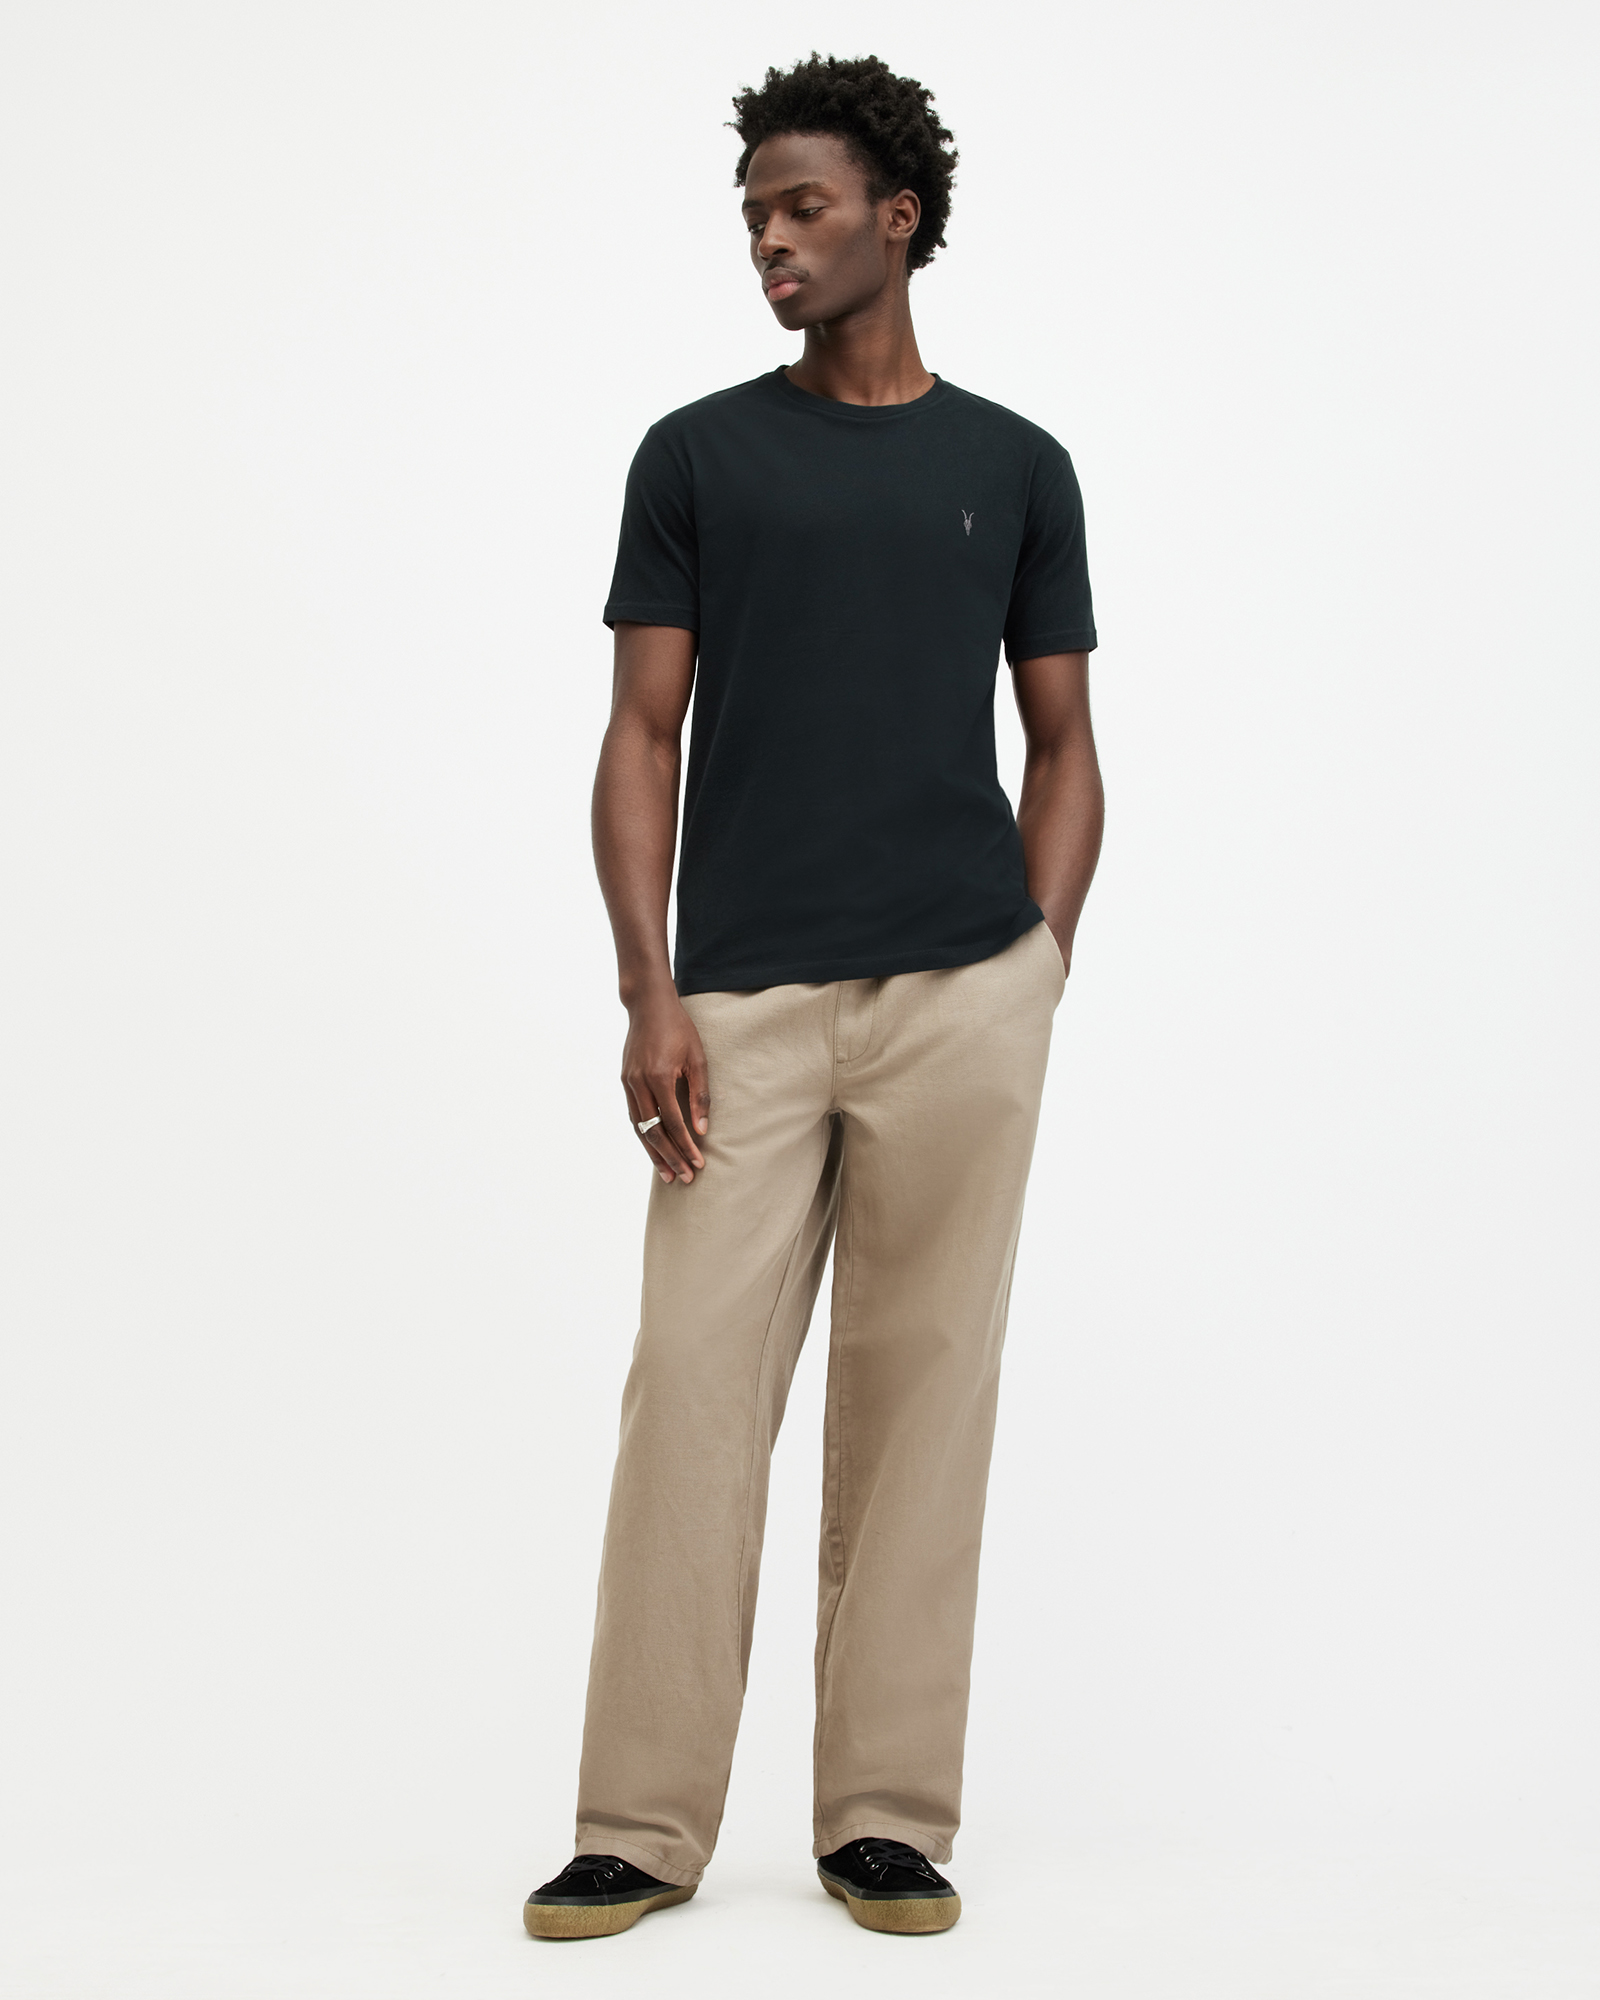 AllSaints Men's Cotton Regular Fit Slim Brace Tonic Short Sleeve Pullover Crew T-Shirt, Black, Size: